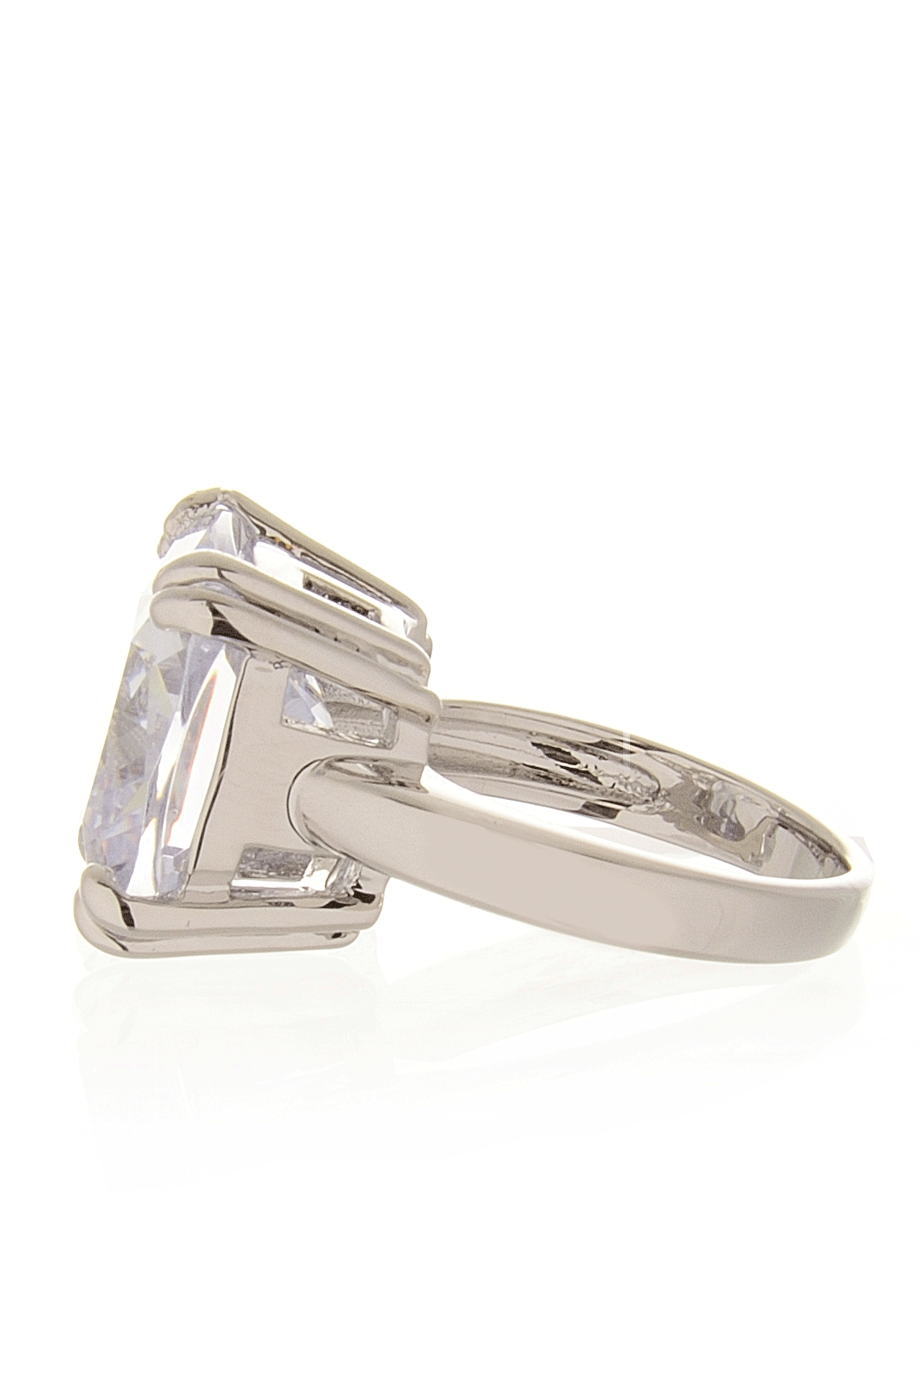 Beatrice Τετράγωνο Δαχτυλίδι με Ζιρκόν - Kenneth Jay Lane | Κοσμήματα Rings Beatrice Silver Crystal Ring